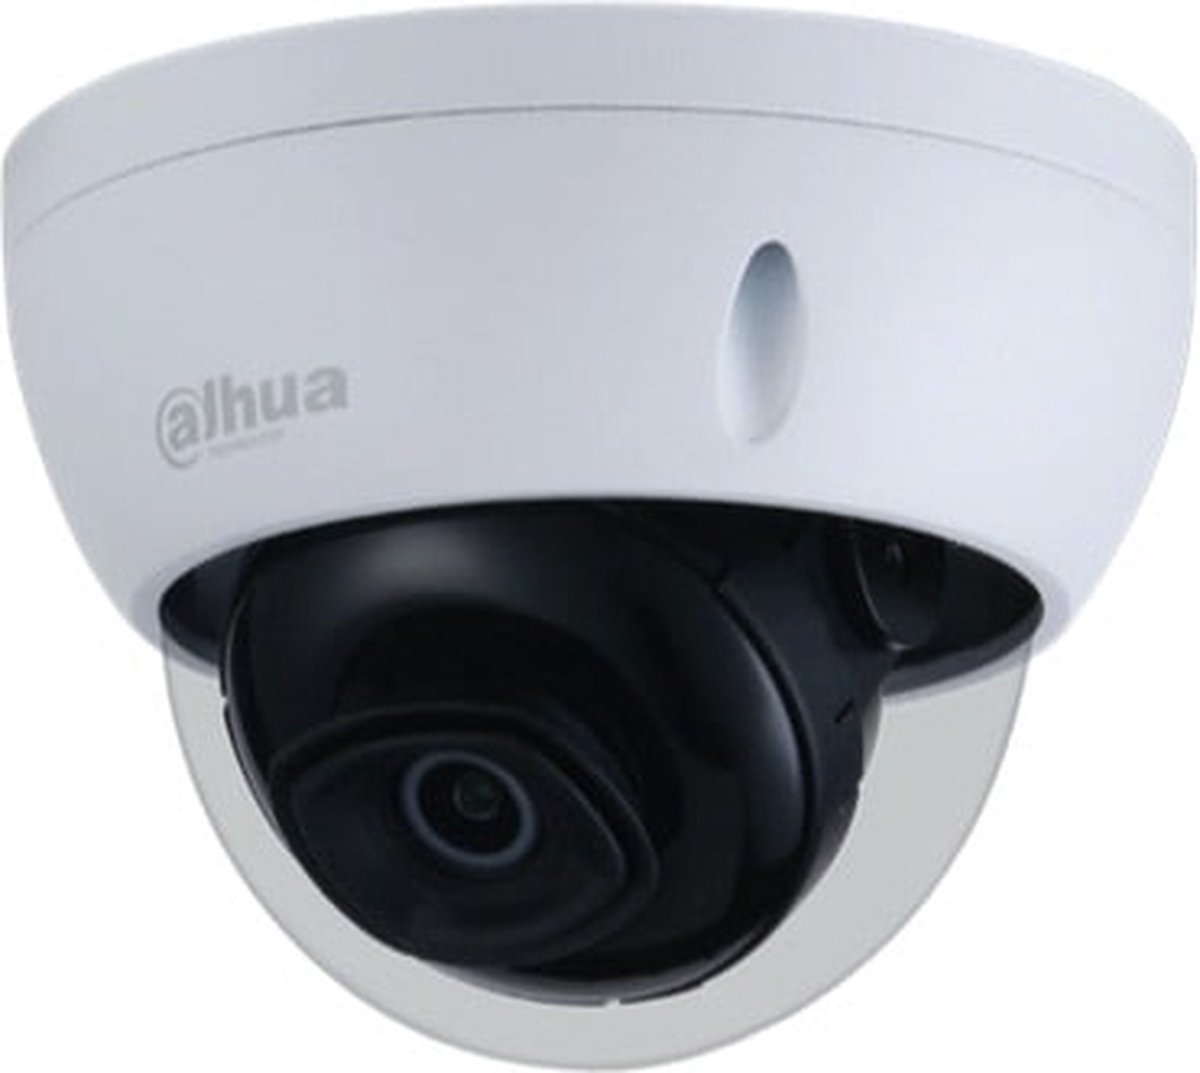 Dahua IPC-HDBW1431E-S4 Full HD 4MP mini dome camera met IR nachtzicht, 120dB WDR en PoE - Beveiligingscamera IP camera bewakingscamera camerabewaking veiligheidscamera beveiliging netwerk camera webcam